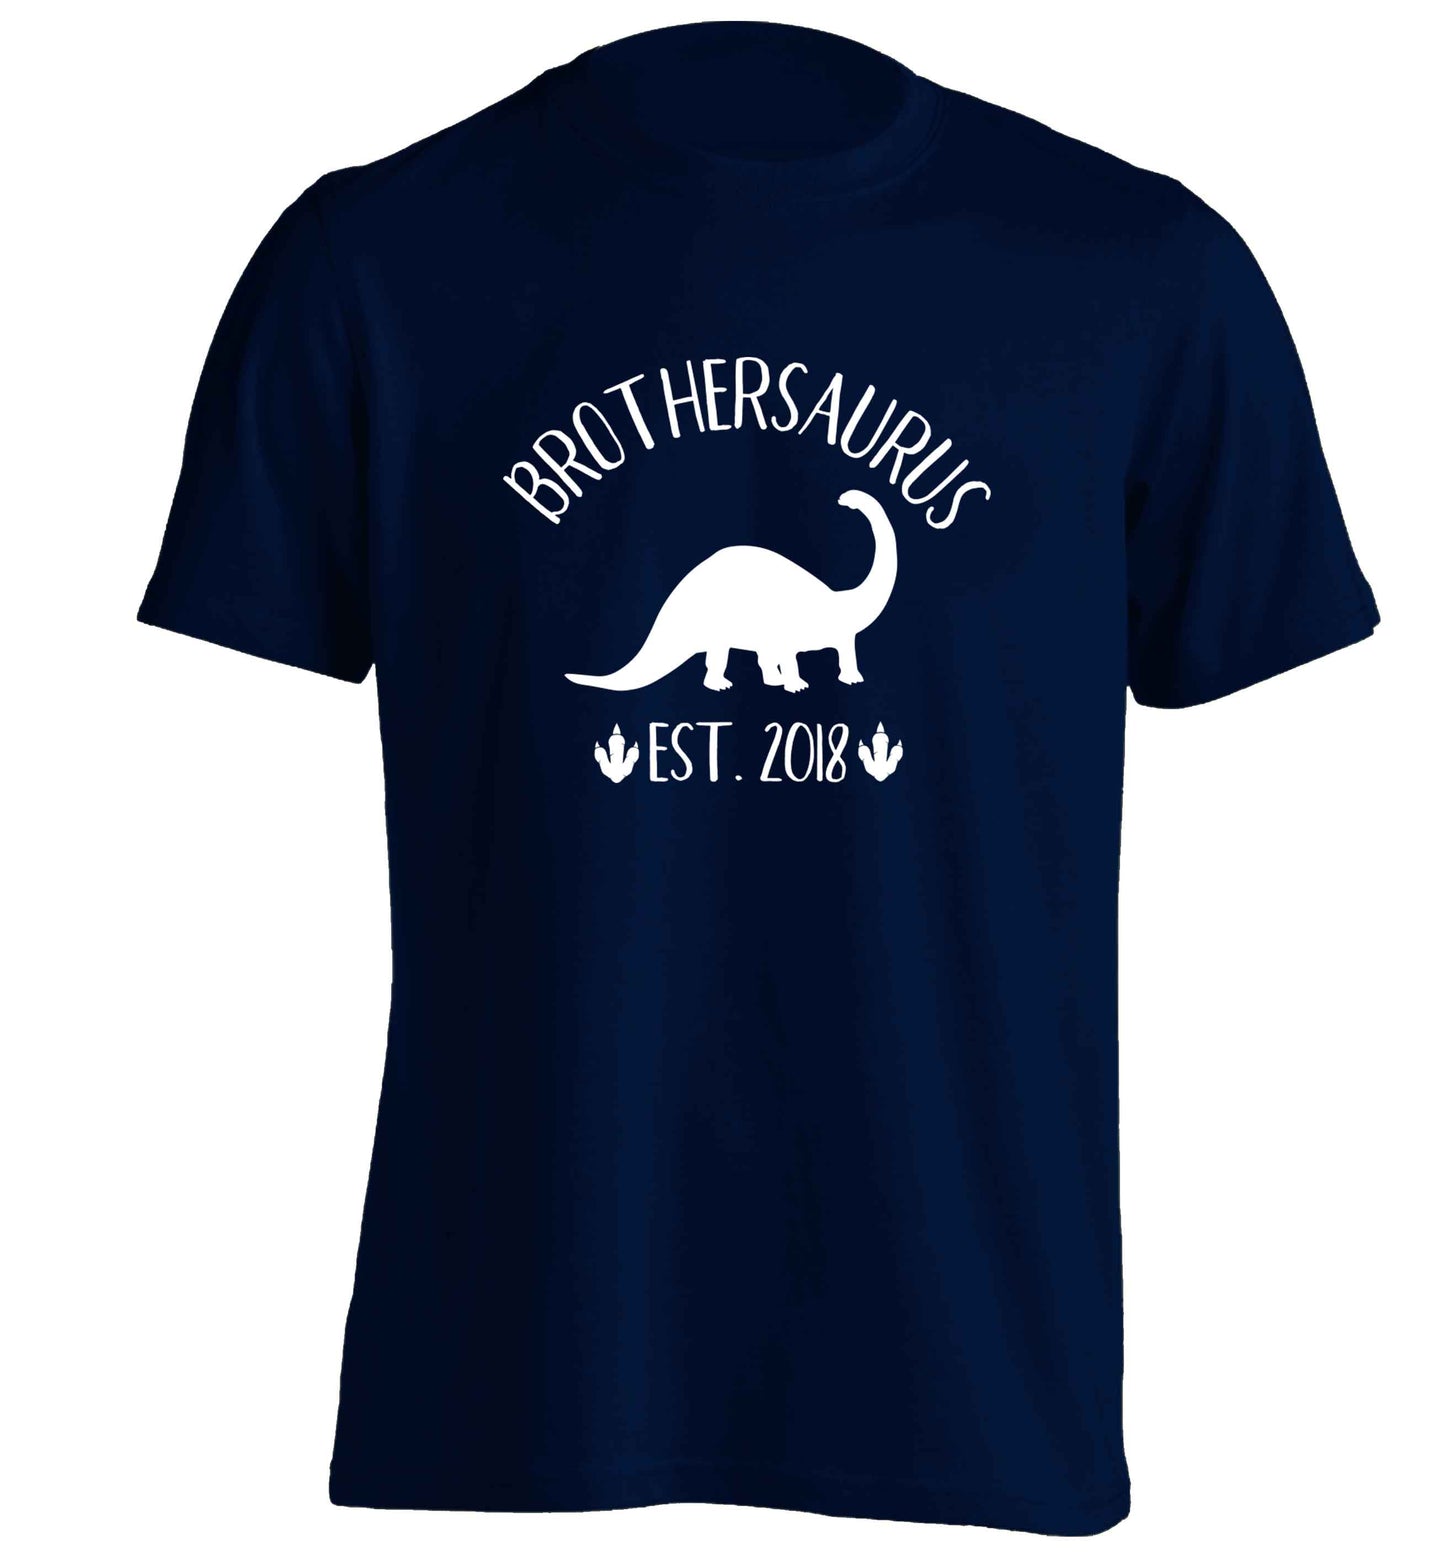 Personalised brothersaurus since (custom date) adults unisex navy Tshirt 2XL